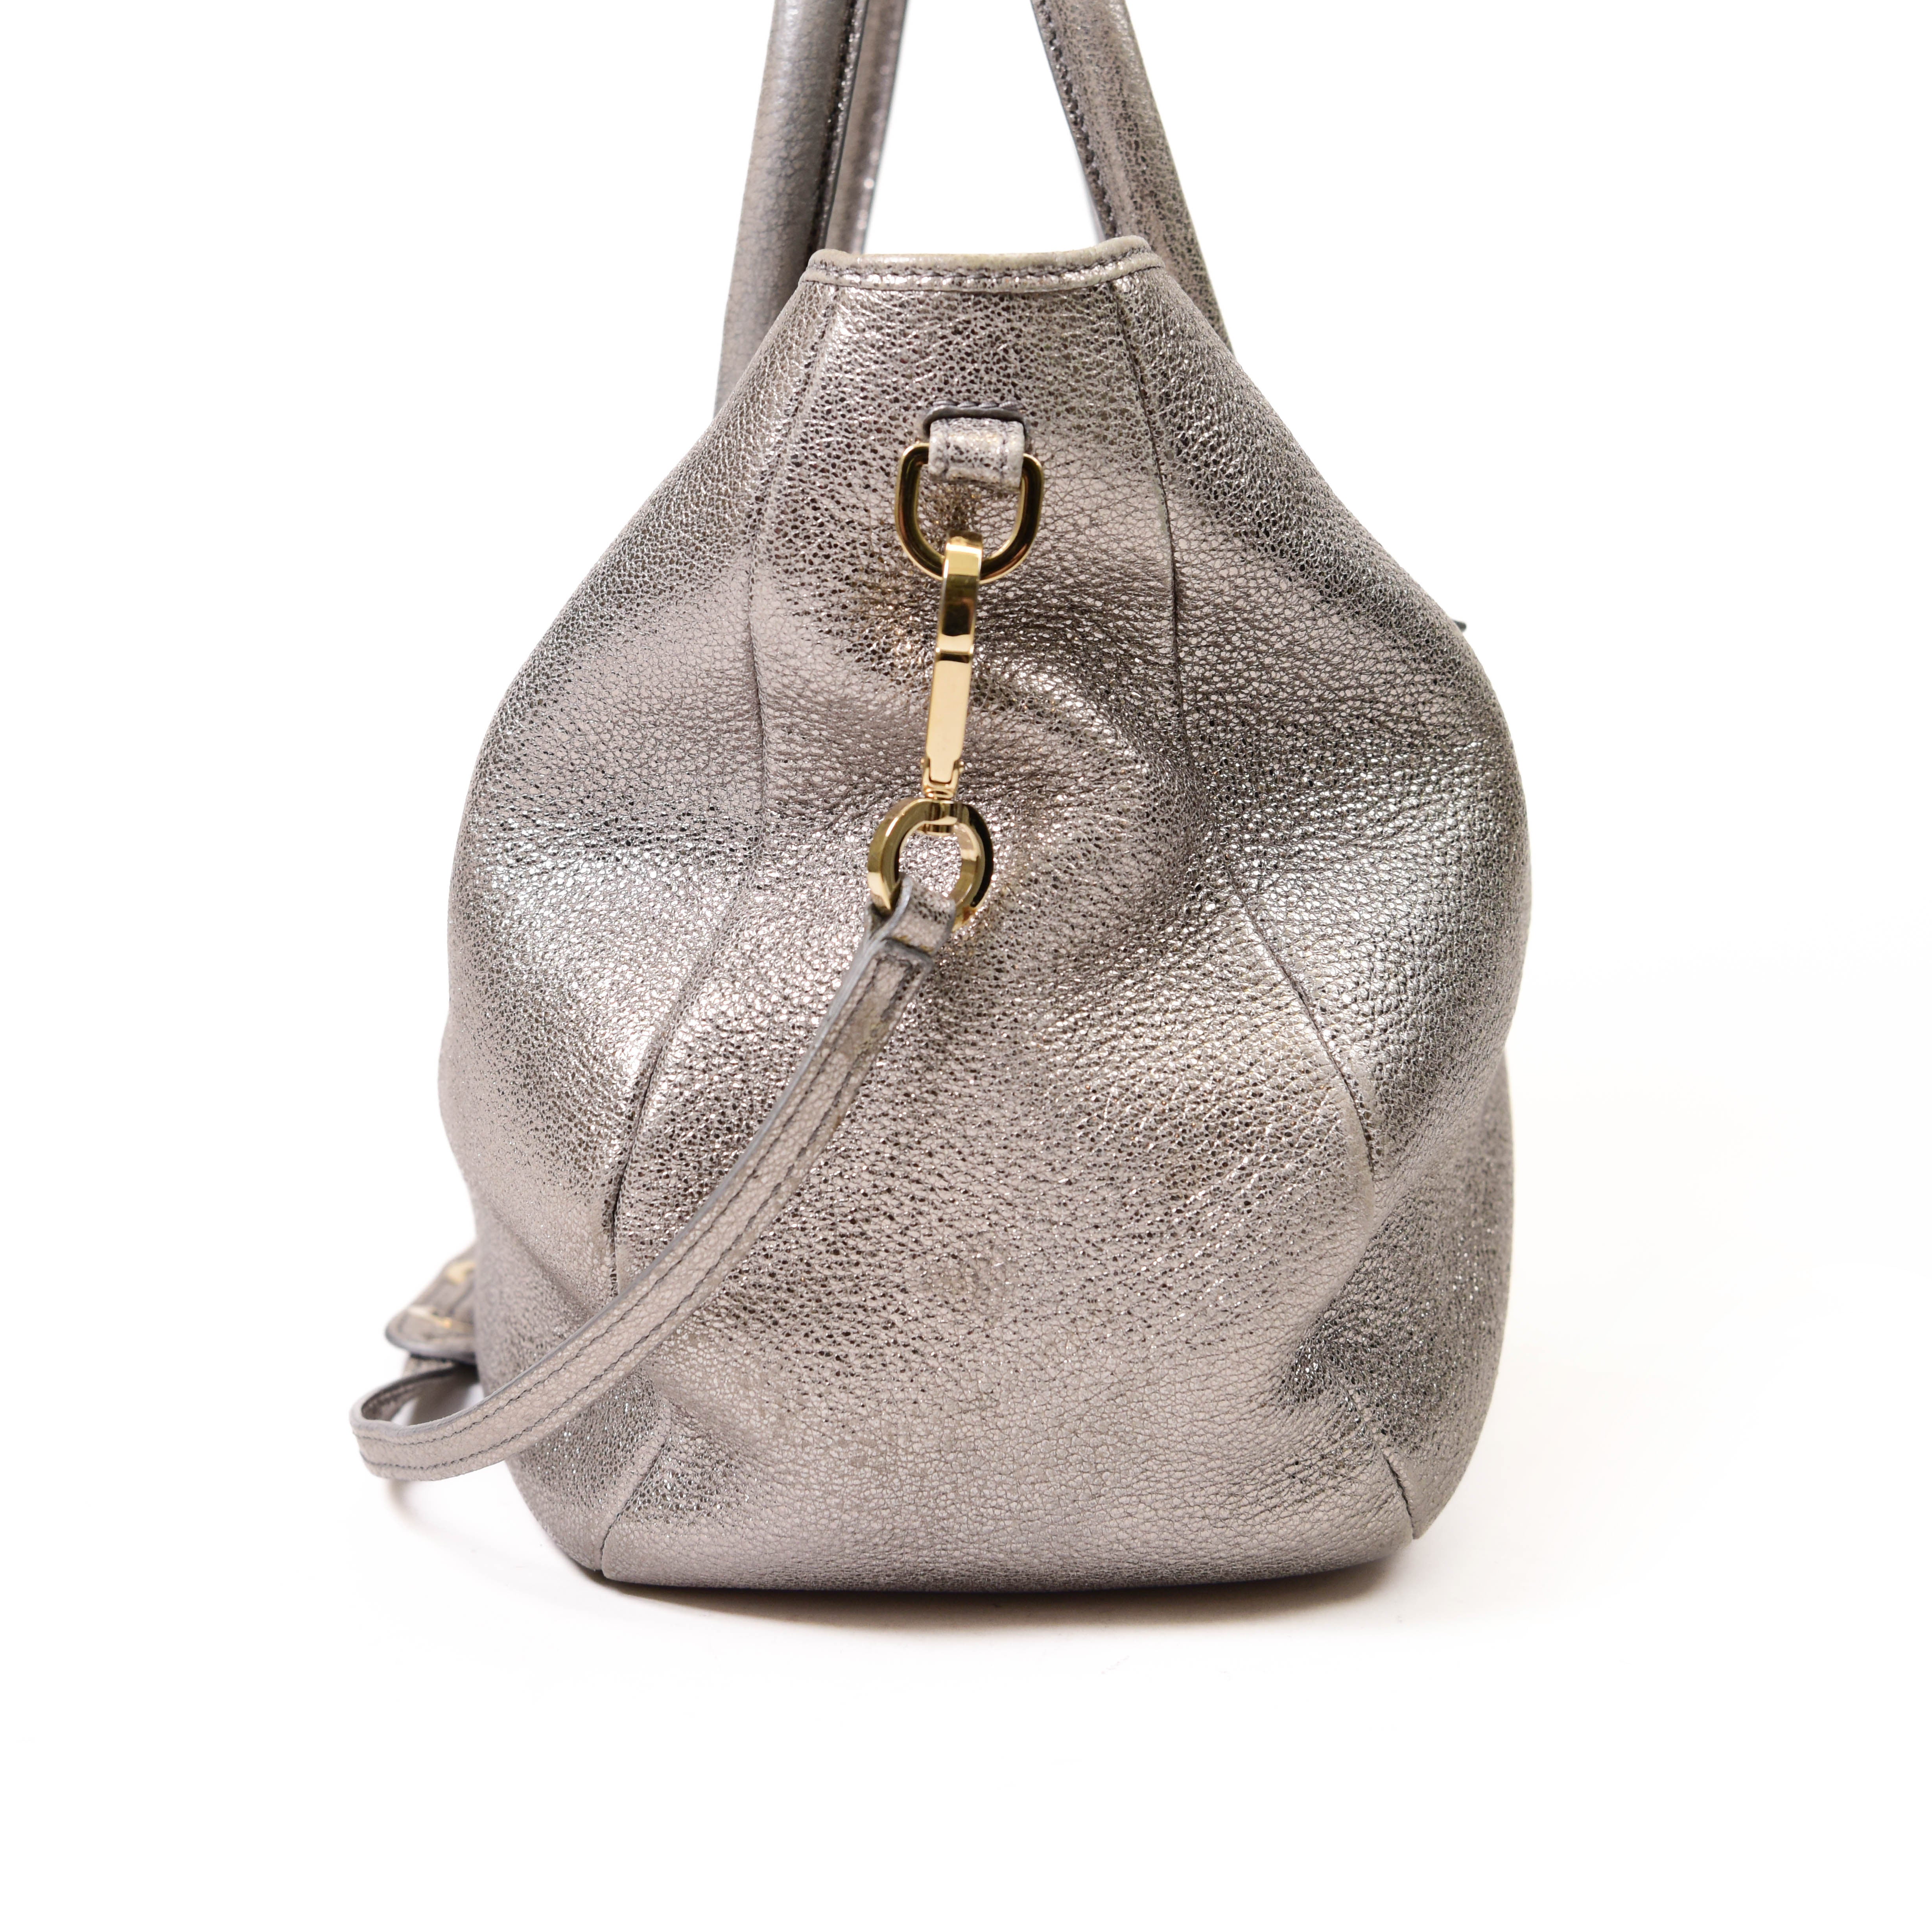 Jimmy Choo Metallic Gold & Silver Crinkled Leather Tote Bag